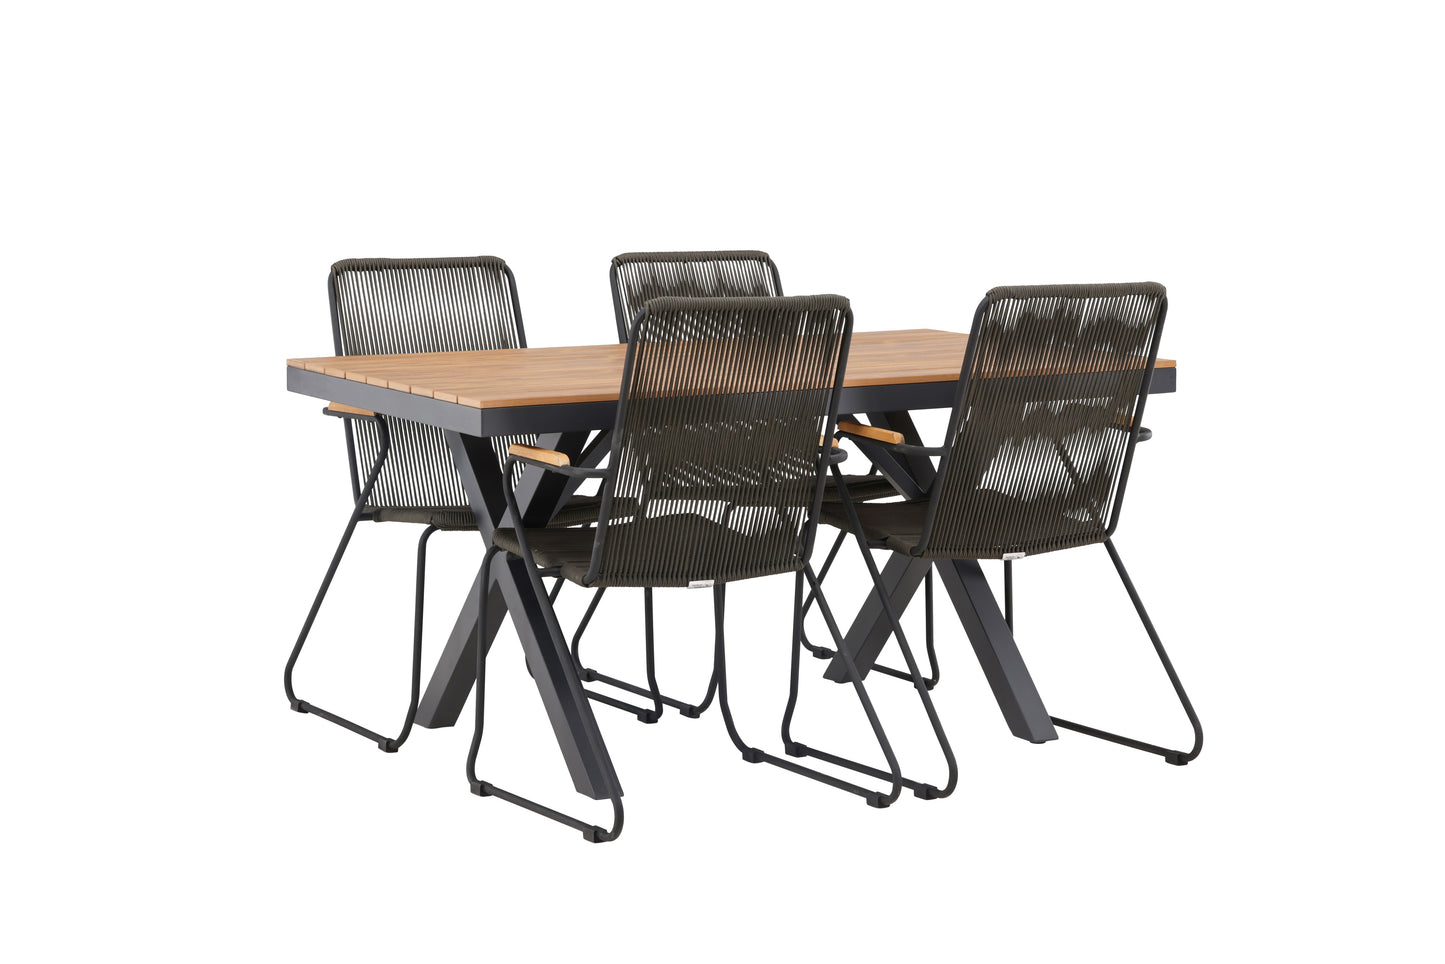 Garcia - Spisebord, Aluminium - Sort / Rektangulær 90*150* + Bois stol Stål - Sort / Mørkegråt Reb